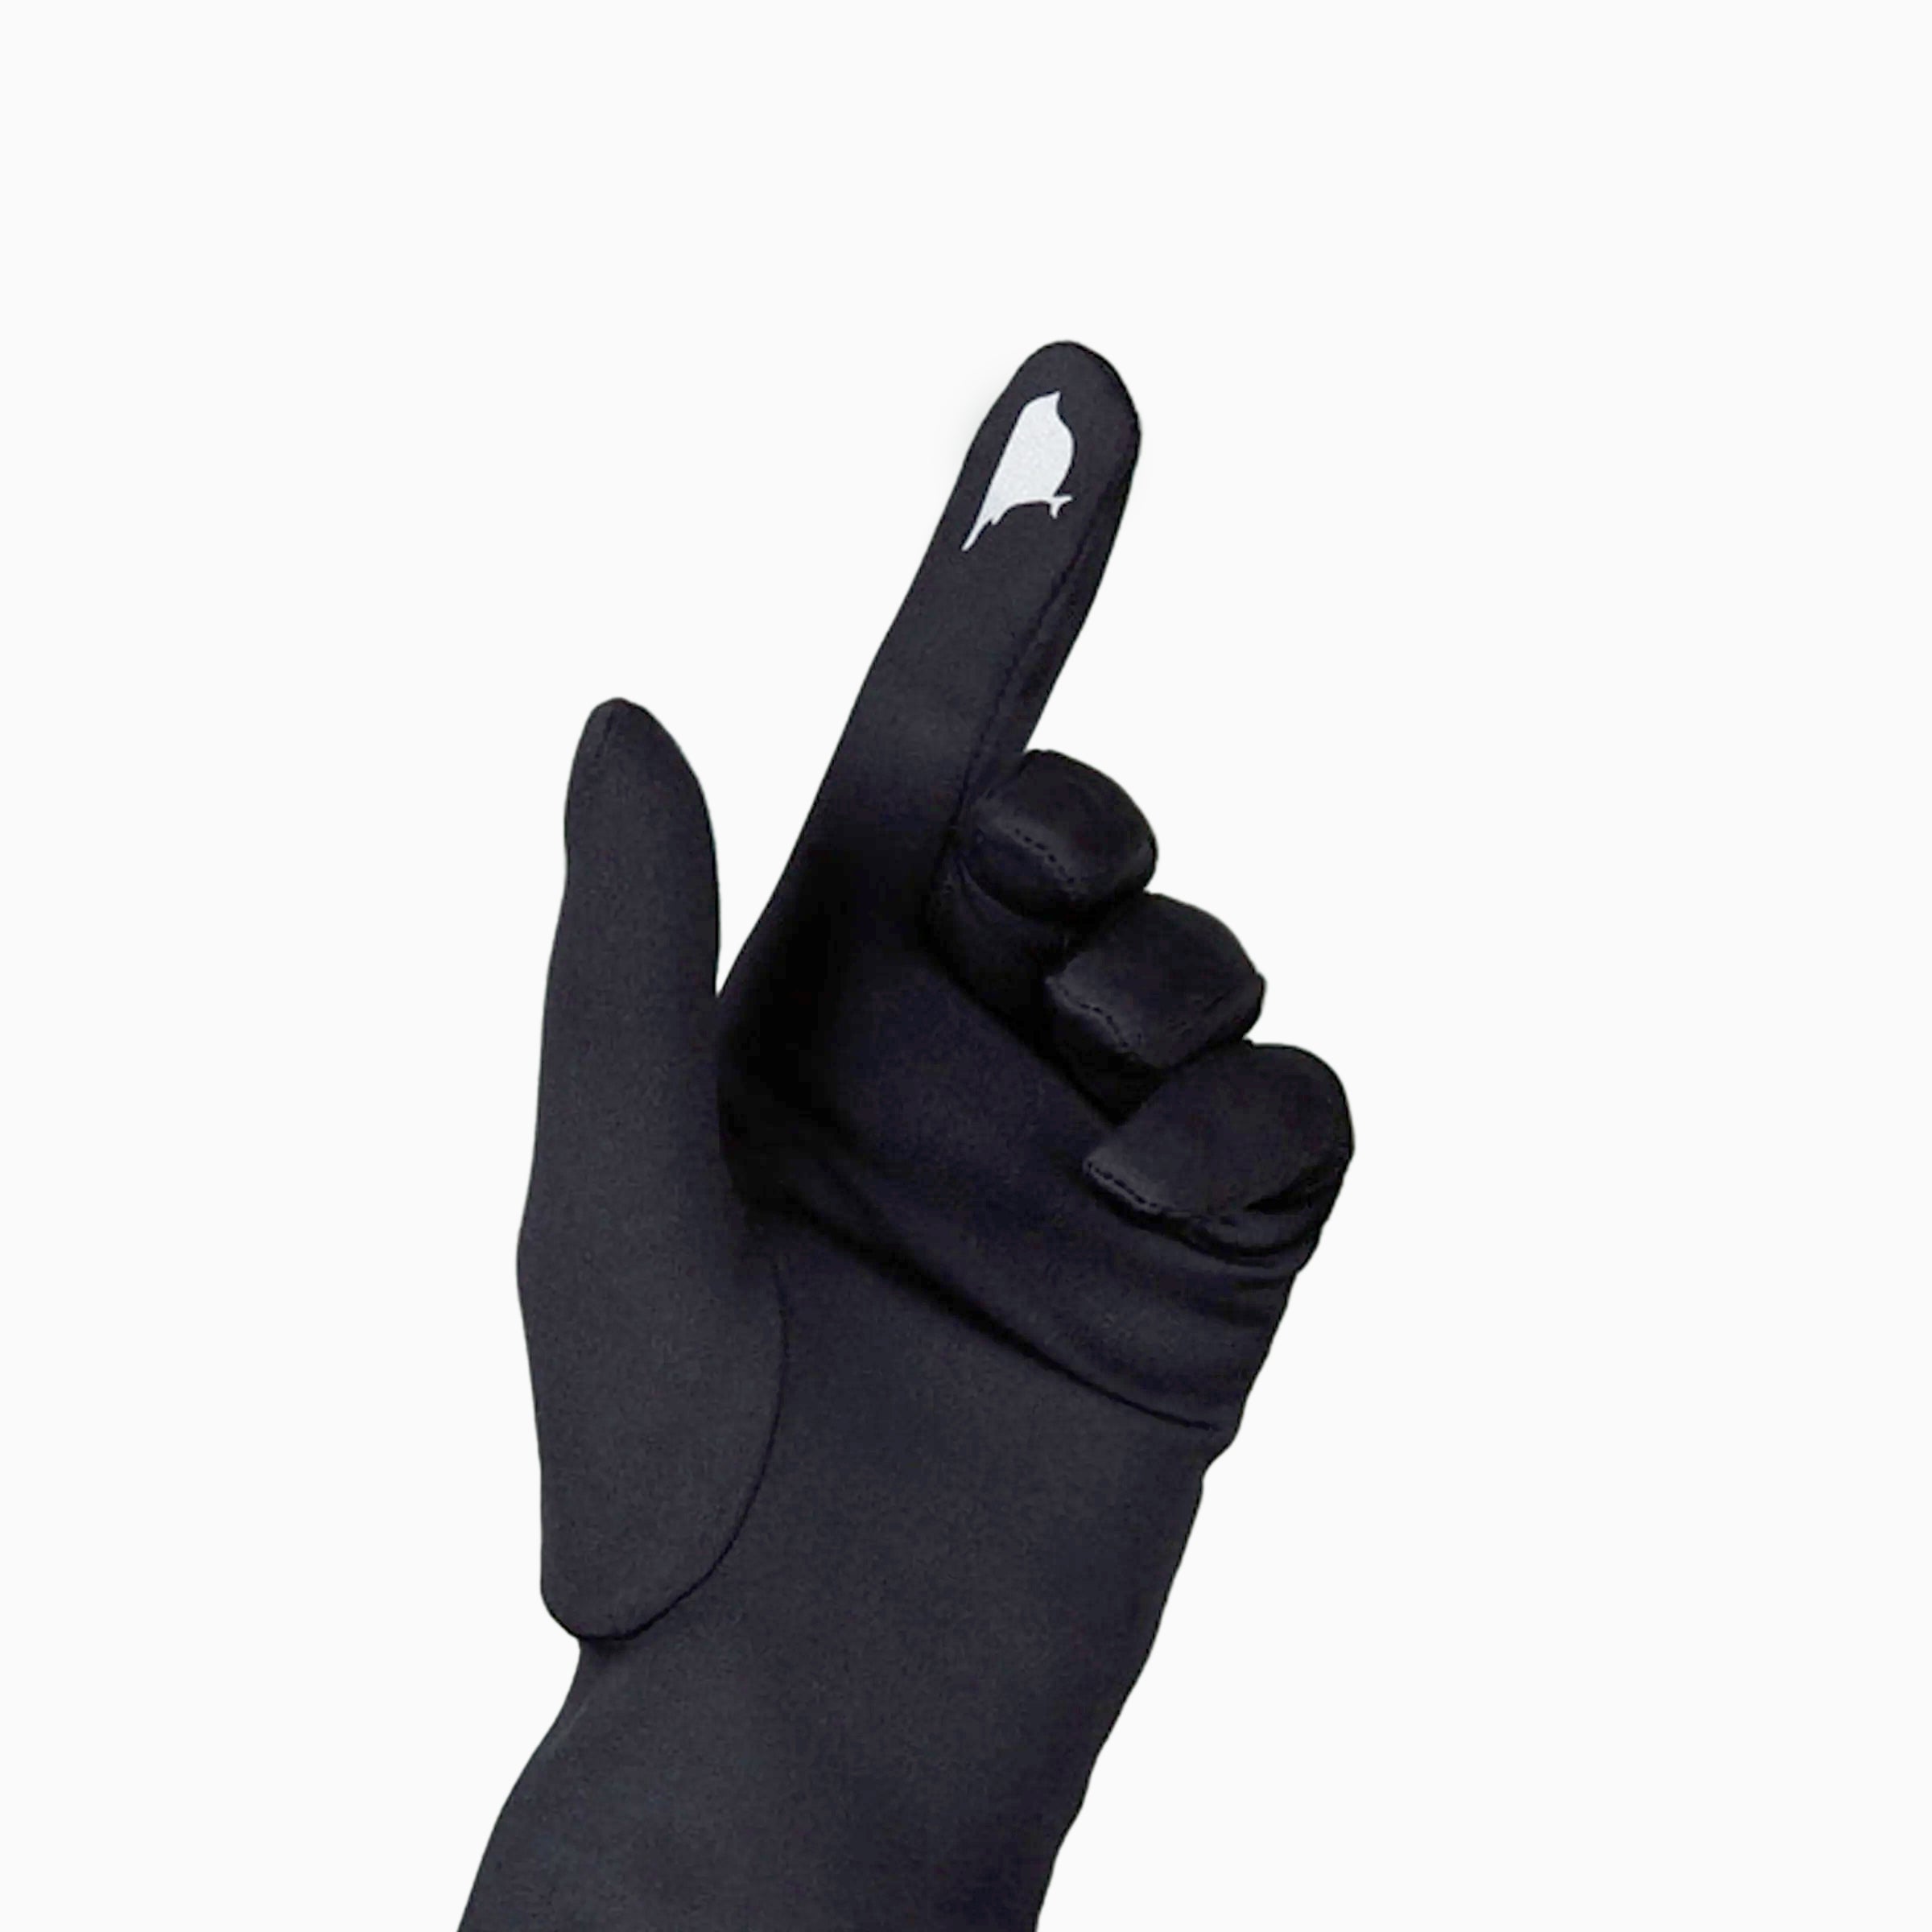 Black women's glove against white background showing technology friendly index finger.